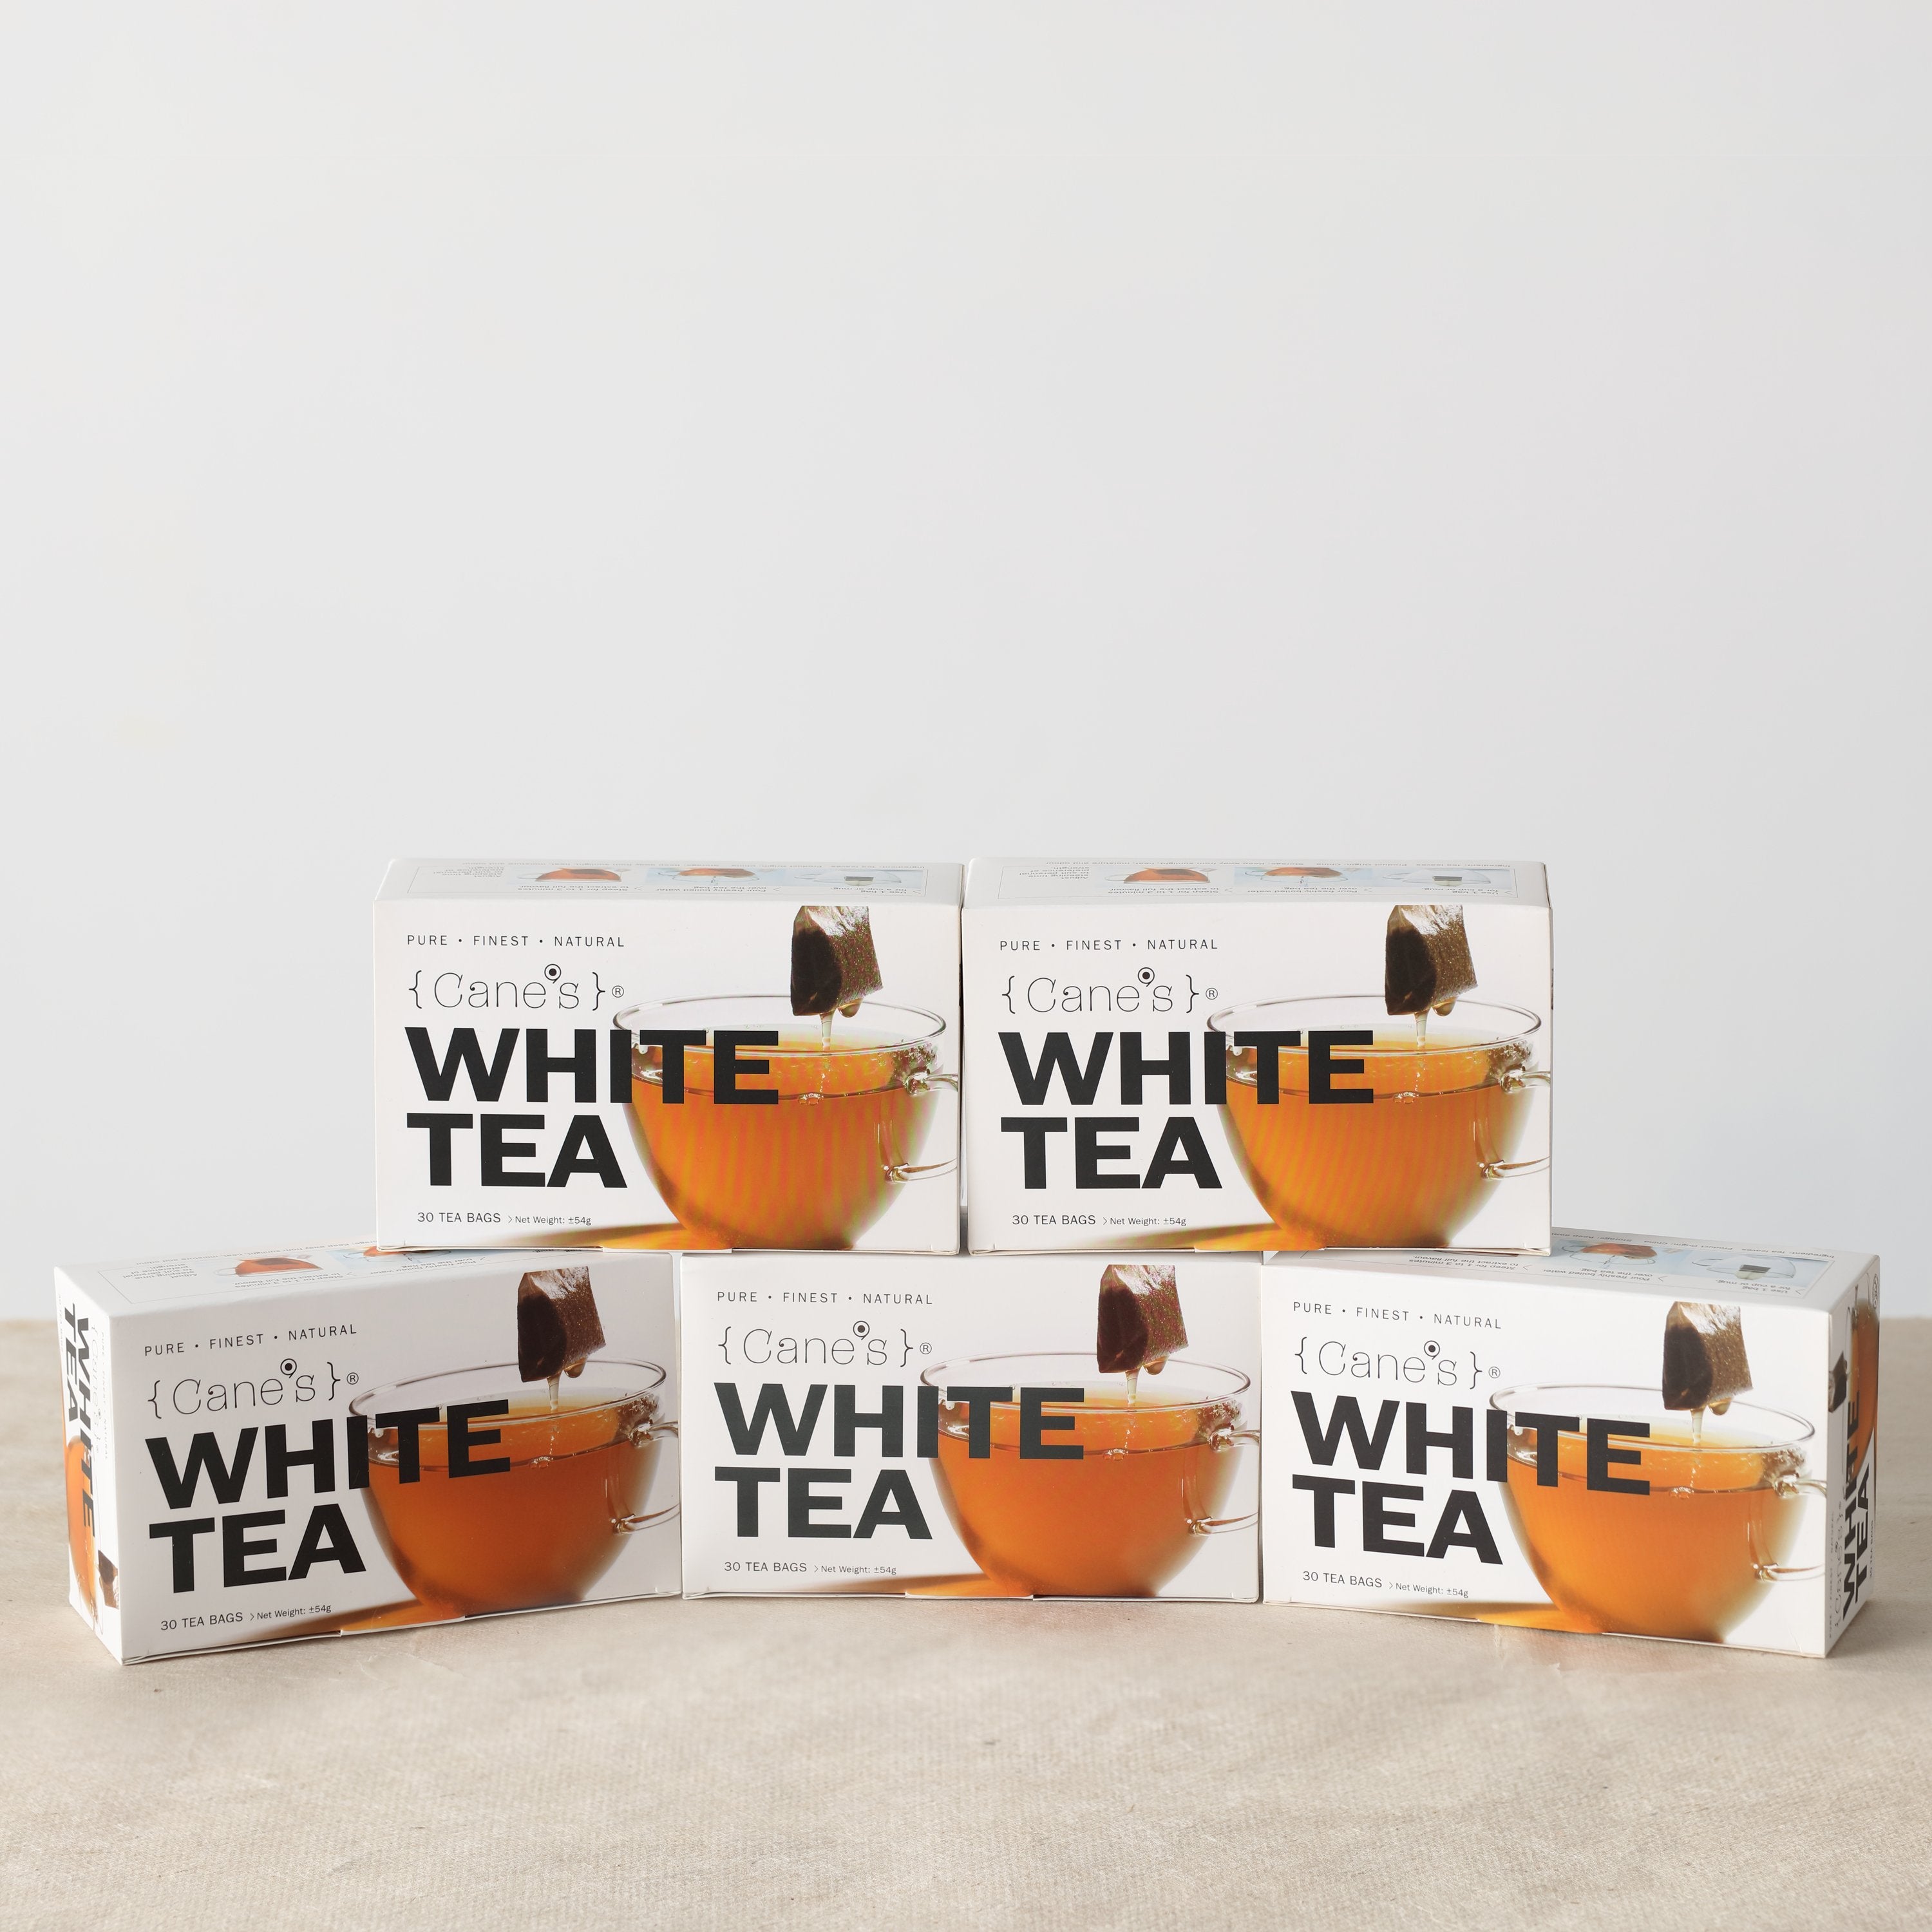 Cane’s White Tea E-Offer Value Pack (30 Teabags/ 5 Boxes)